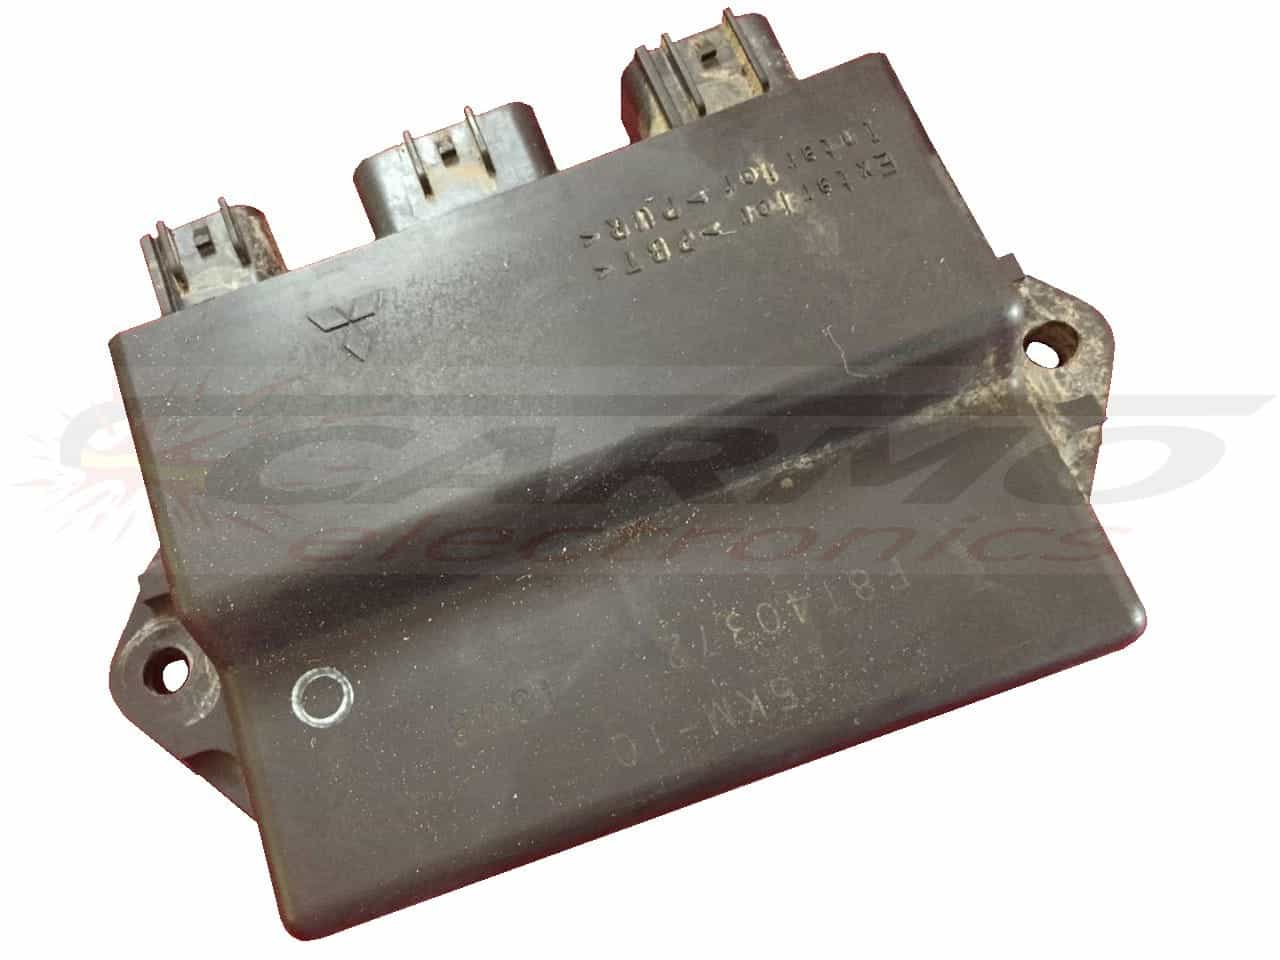 YFM660 Grizzly CDI TCI igniter computer controller (F8T40372, 5KM-10)